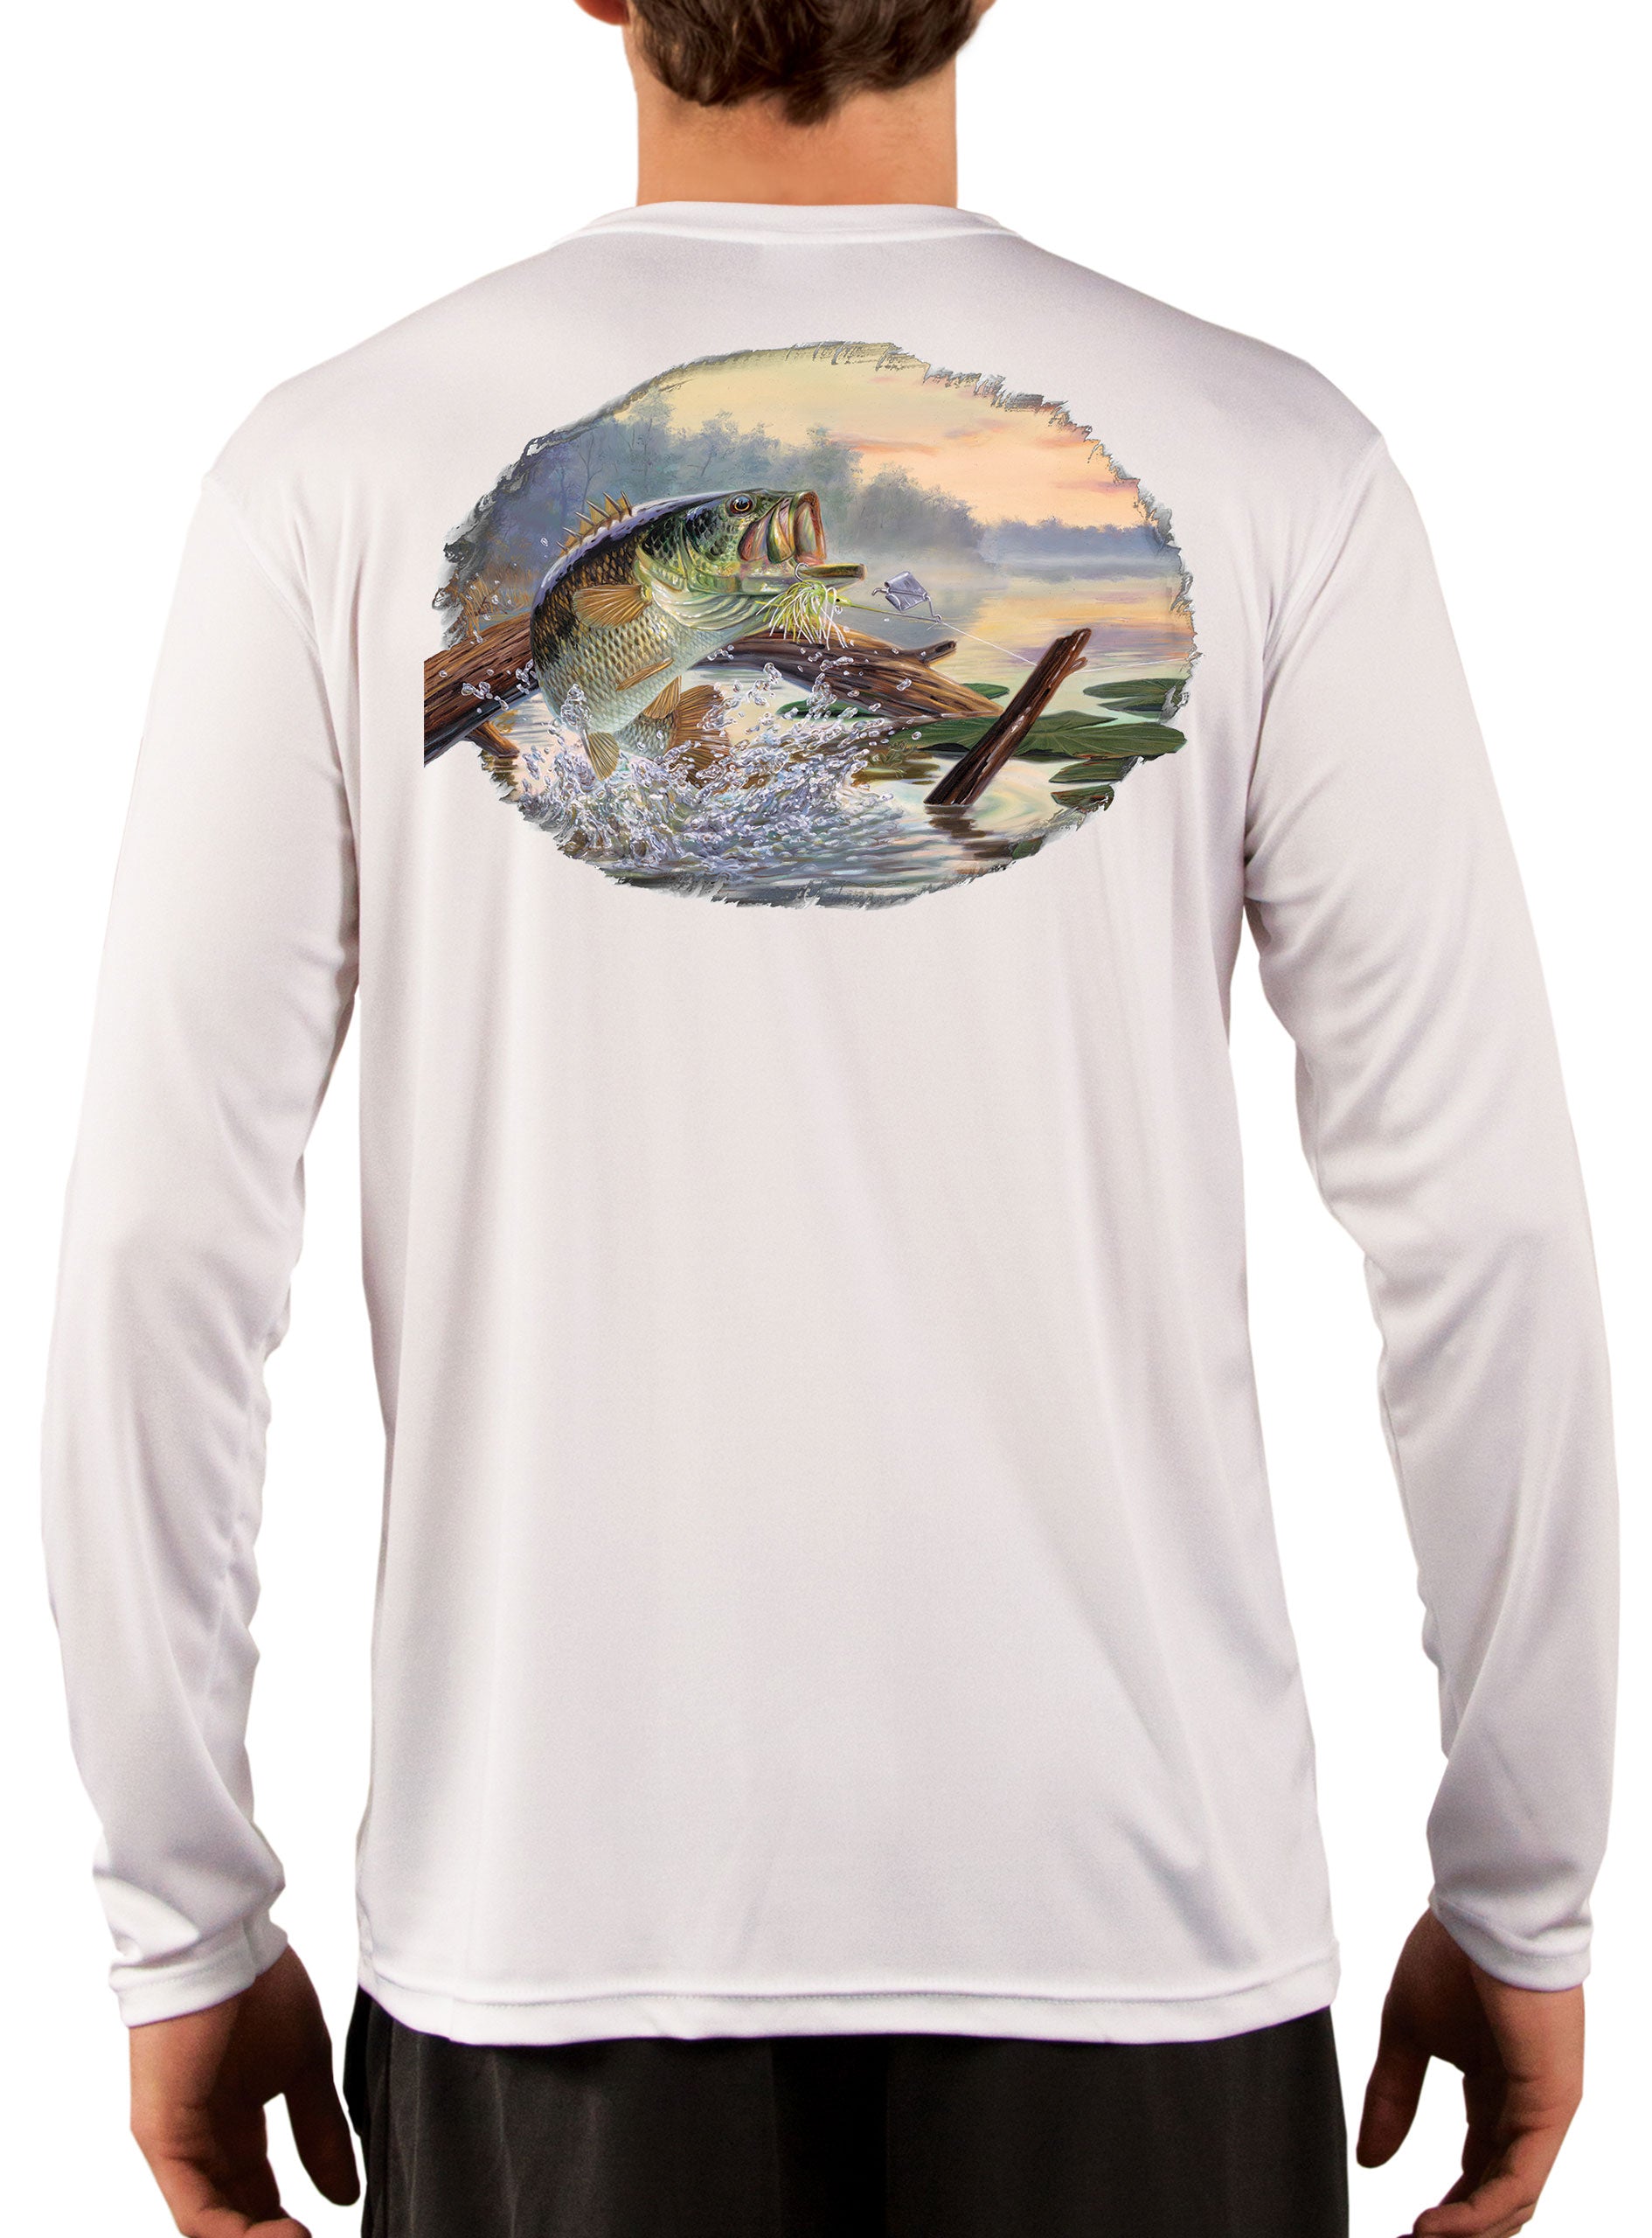 Fisherman Gift, Performance Fishing Shirt Rainman WaveShield. Gifts for Men - Fishing Clothes.